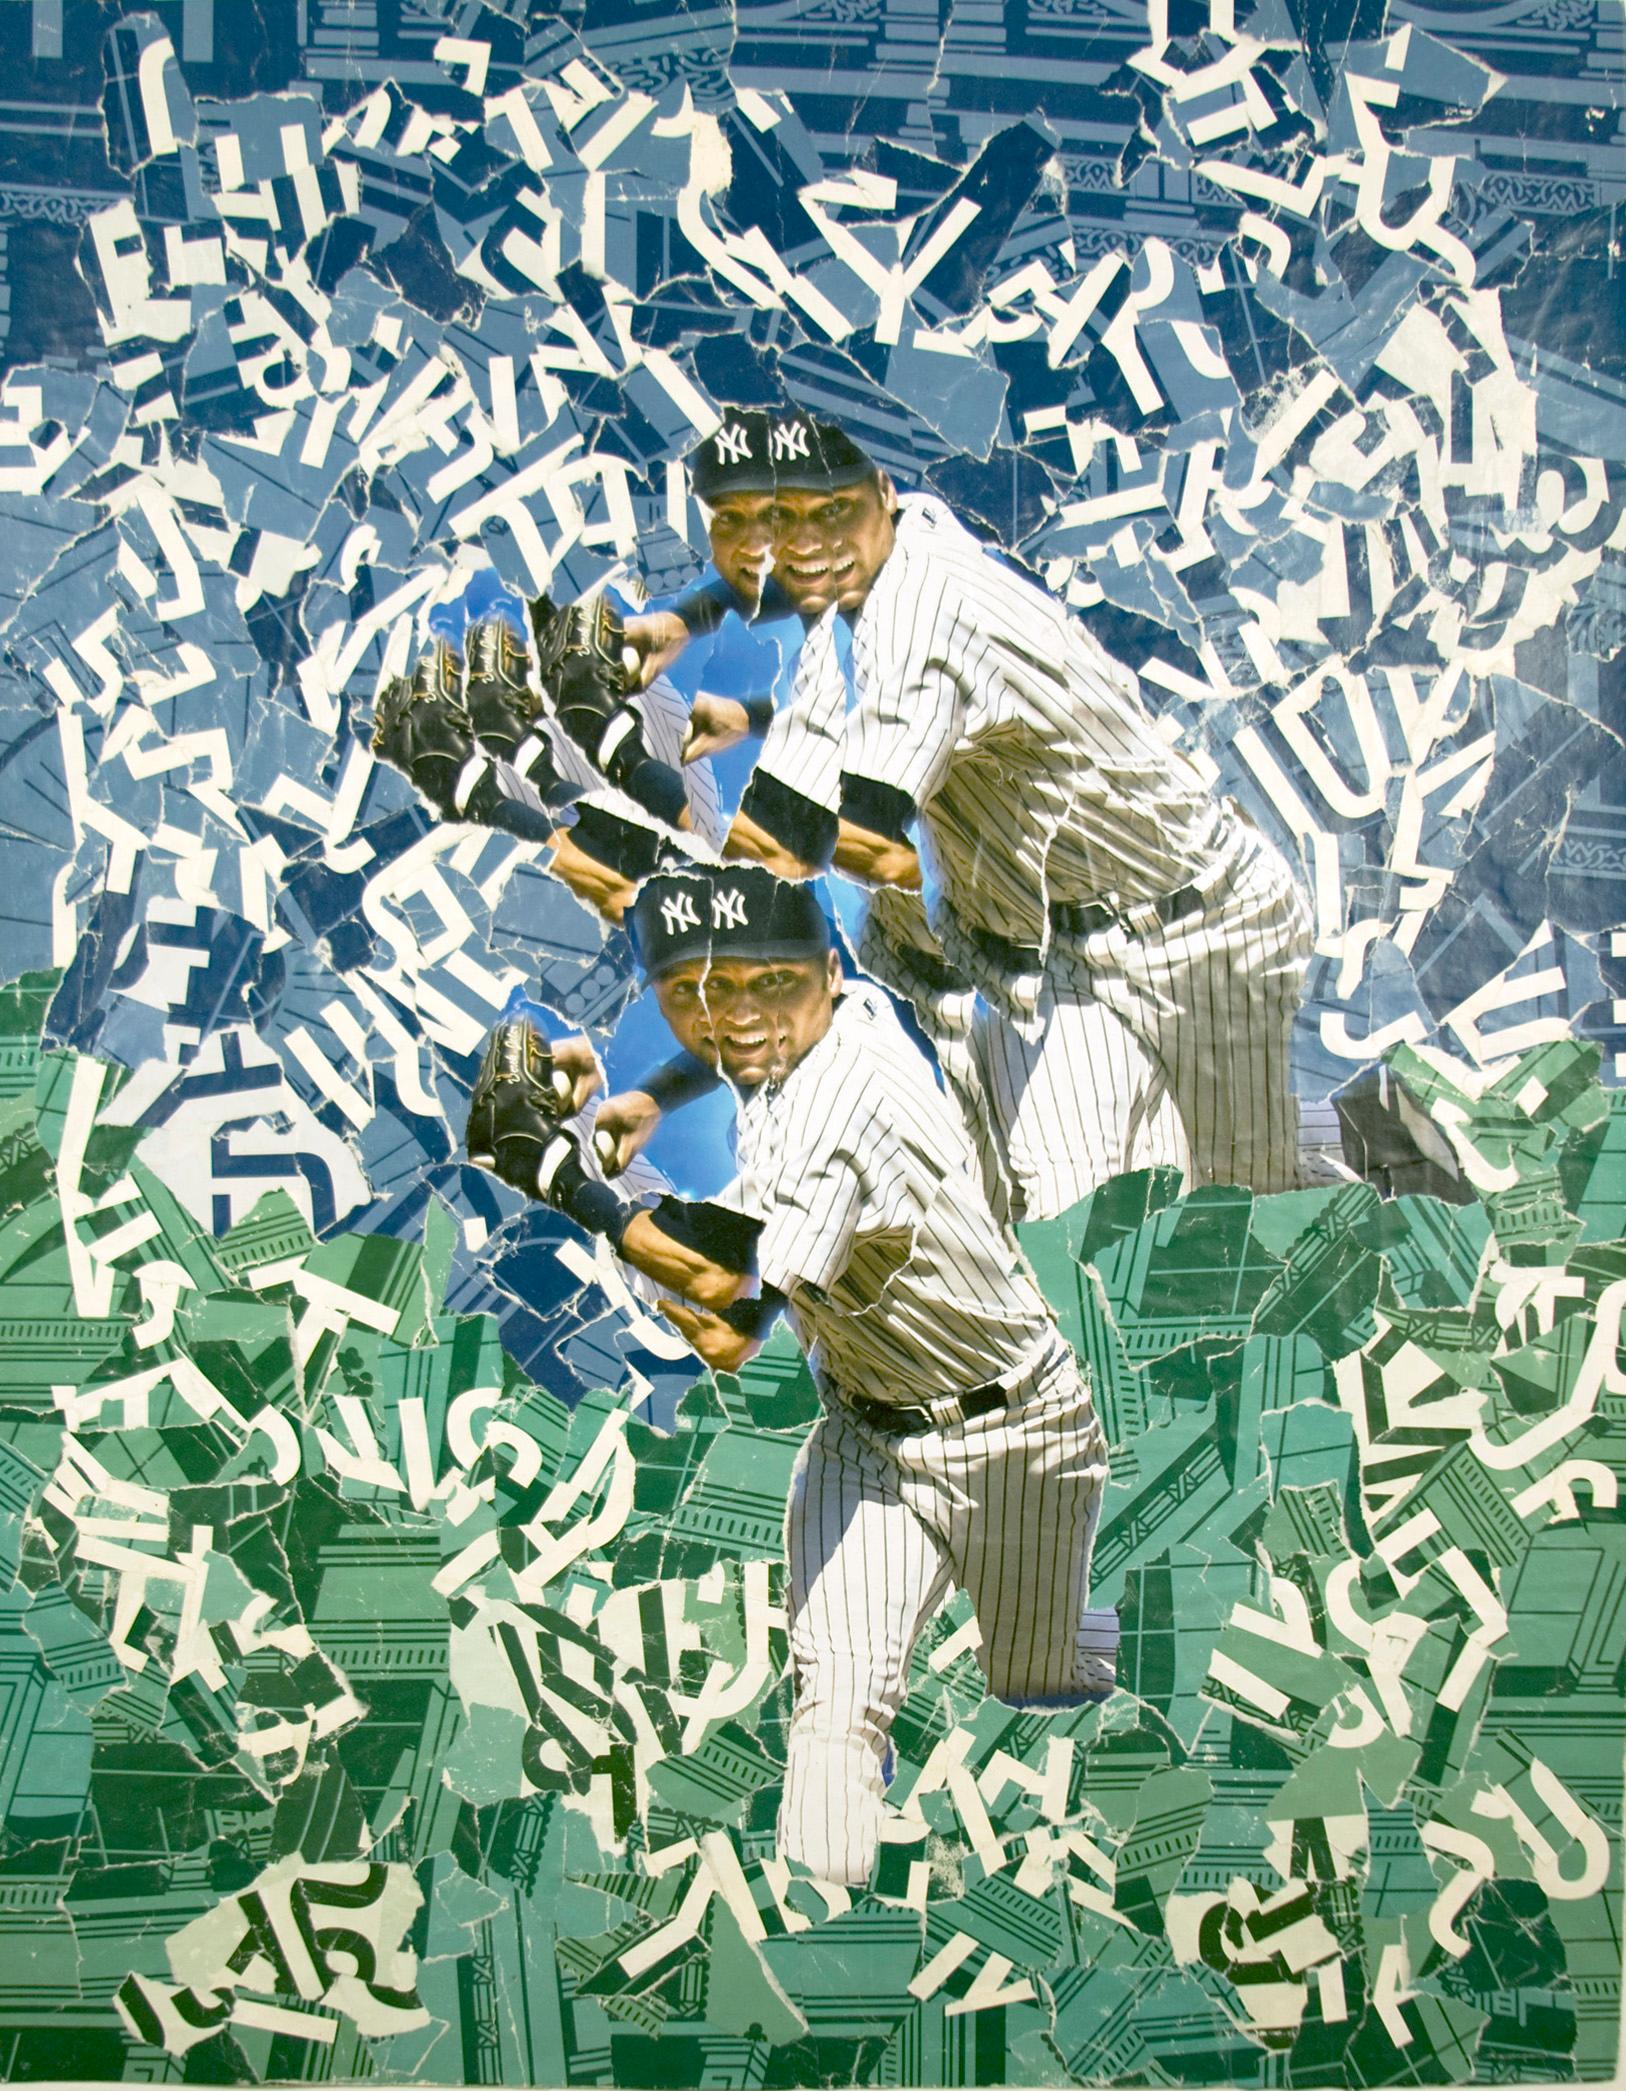 Derek Jeter 4 Luck 2009 World Series  - Art by Michael Anderson